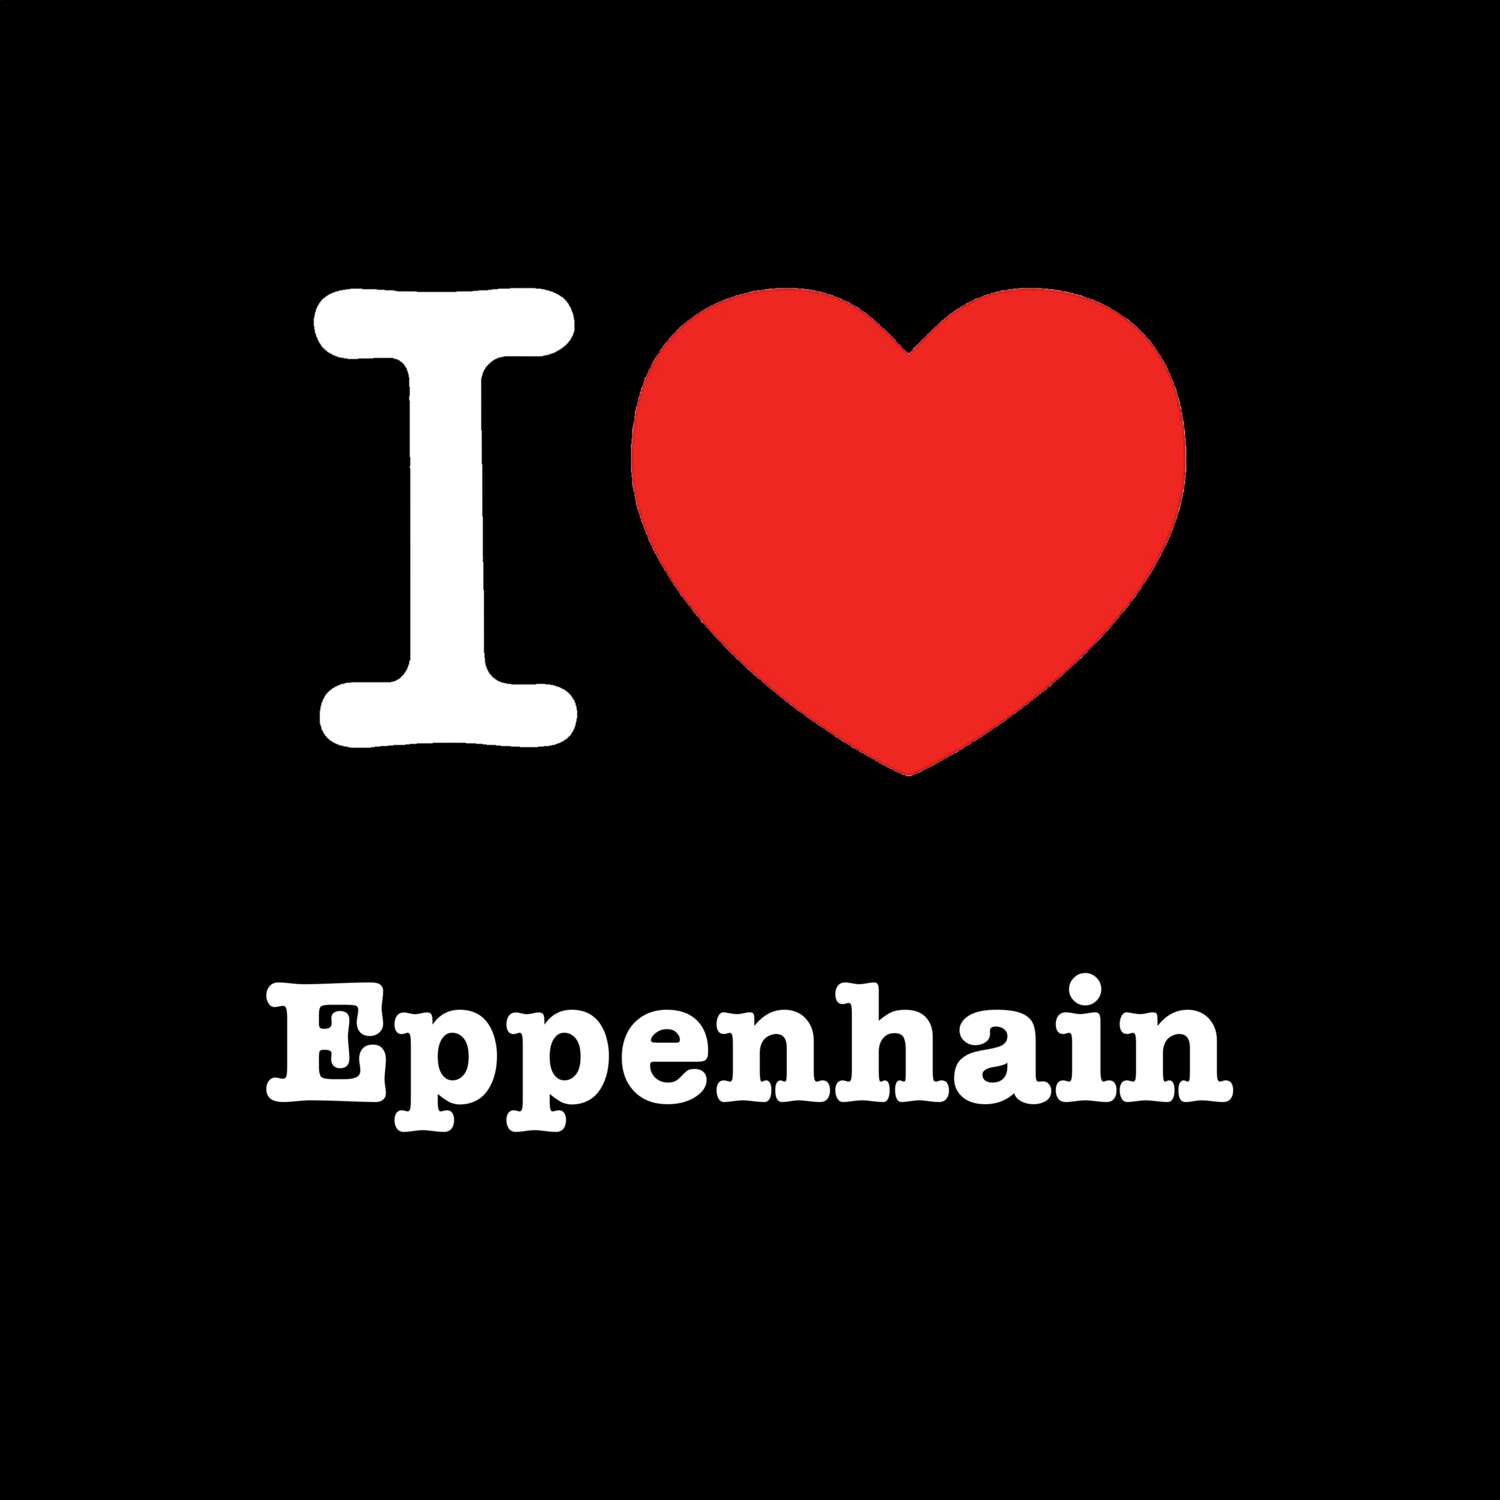 Eppenhain T-Shirt »I love«